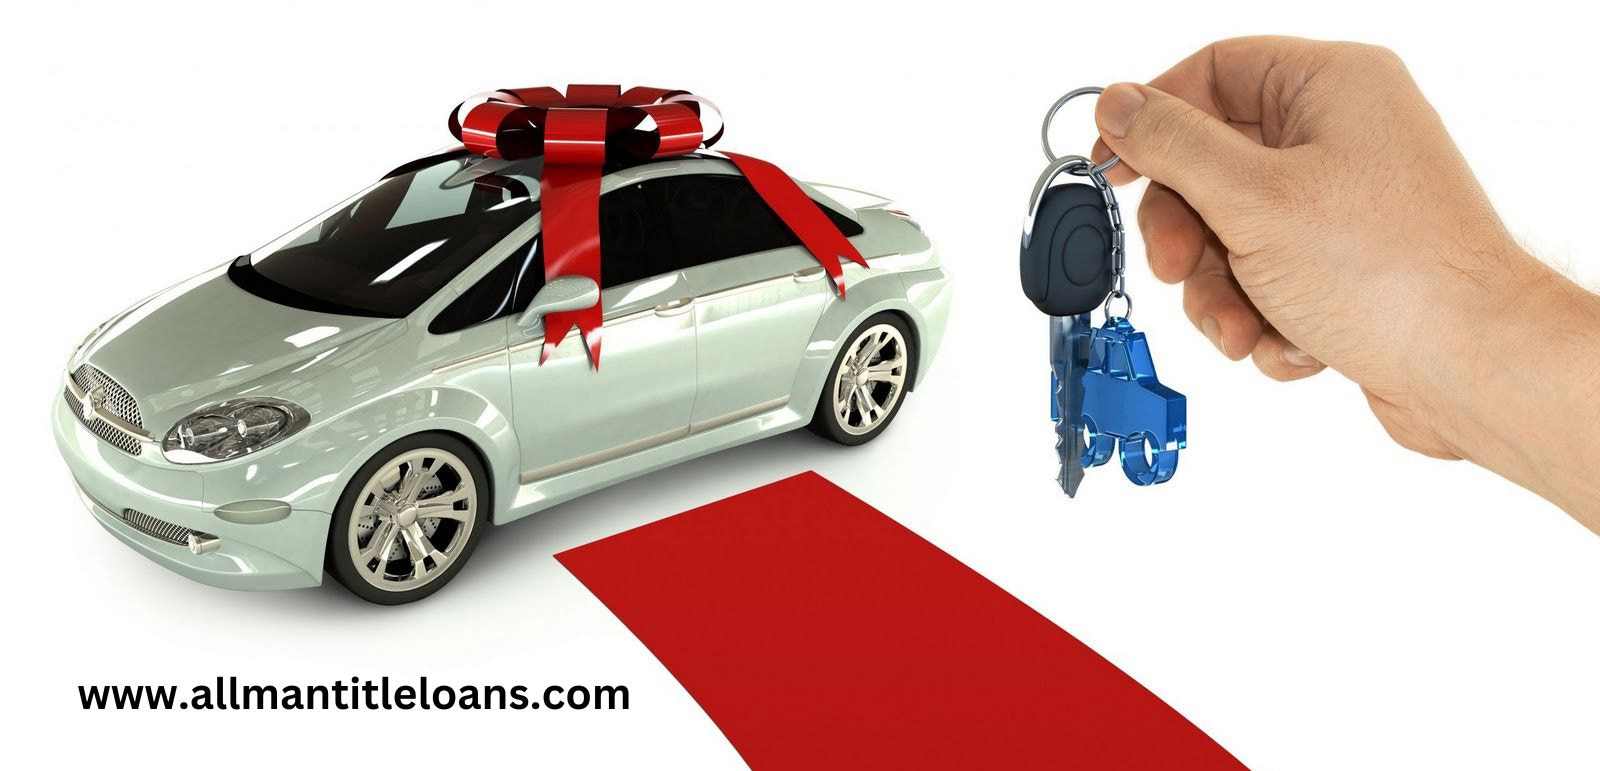 Bad Credit Loans in Houston, Texas - Finance Rebuilt Titles & Salvage Cars | Allman Title Loans - ww